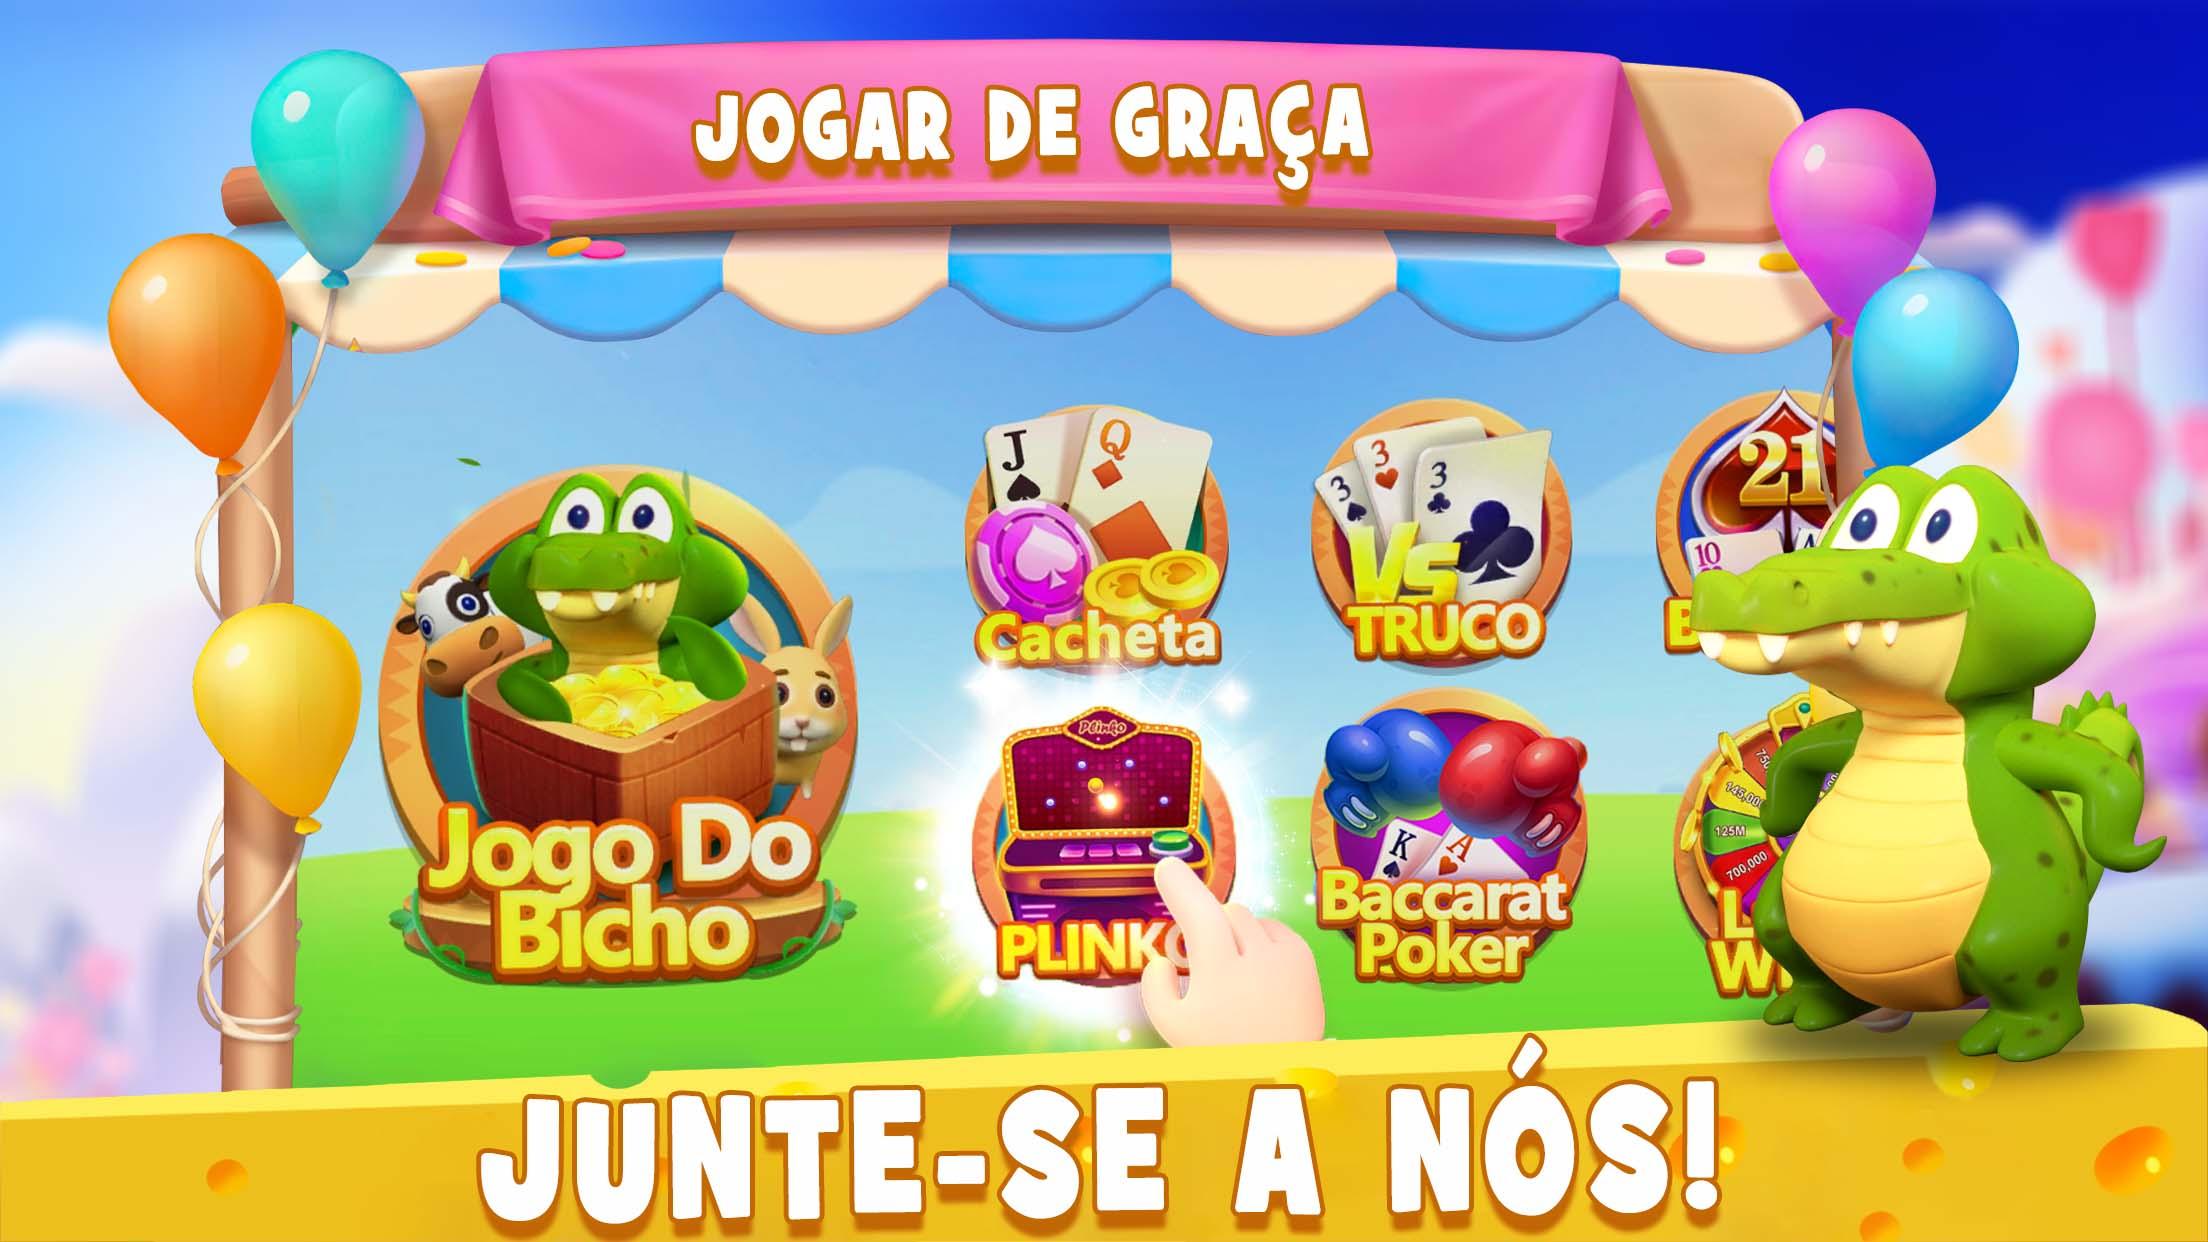 Download Mines: Jogo do Bicho on PC with MEmu